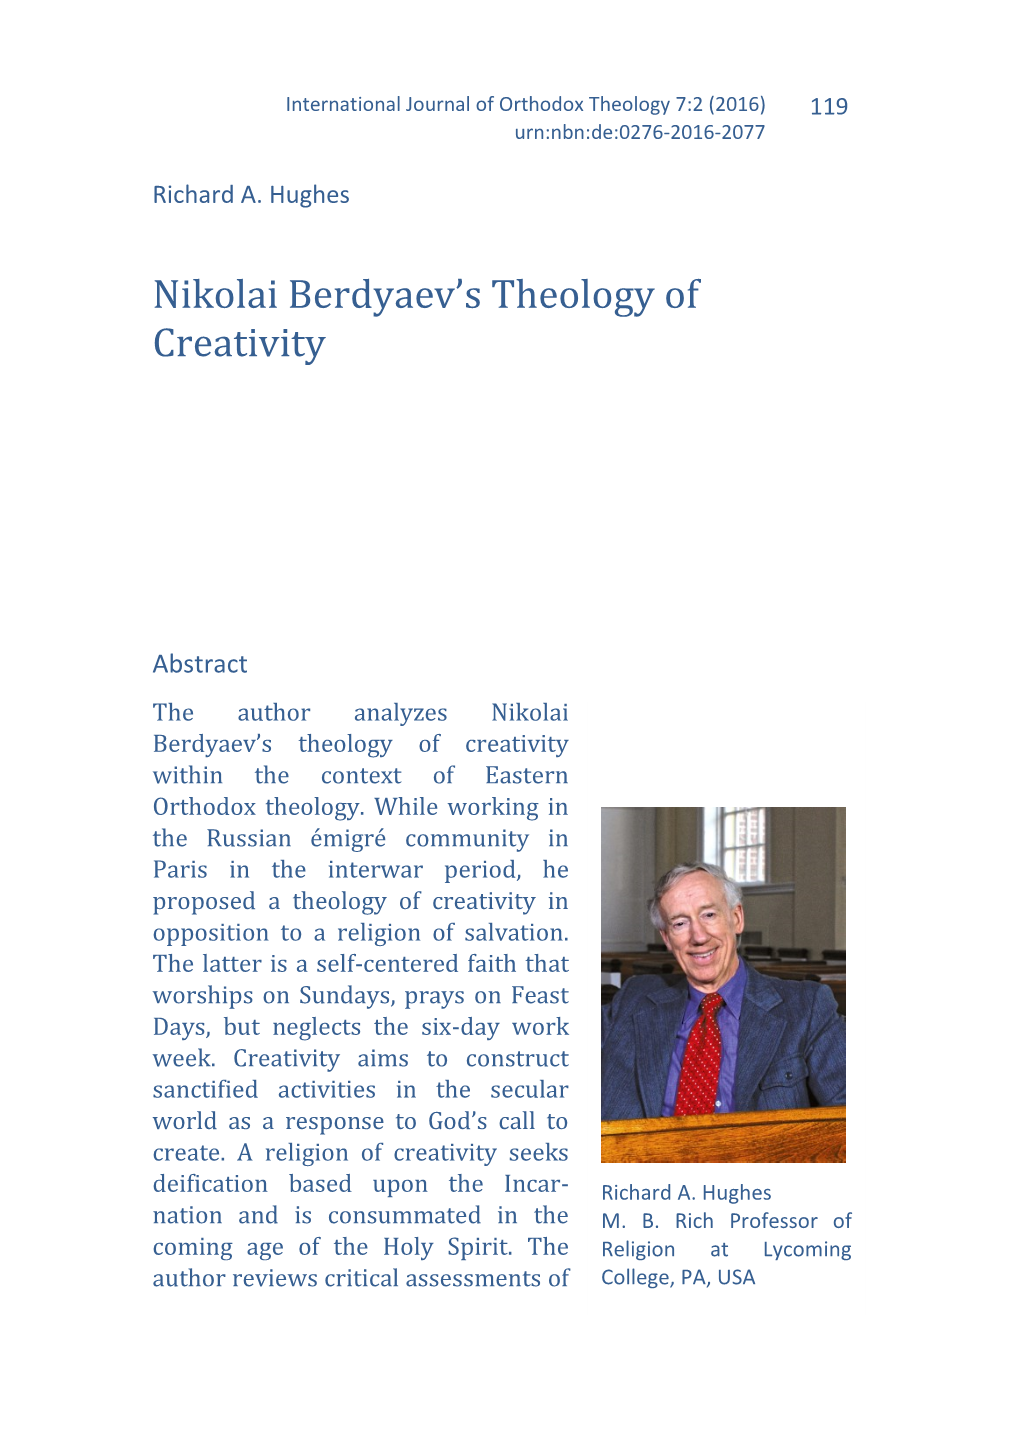 Nikolai Berdyaev's Theology of Creativity